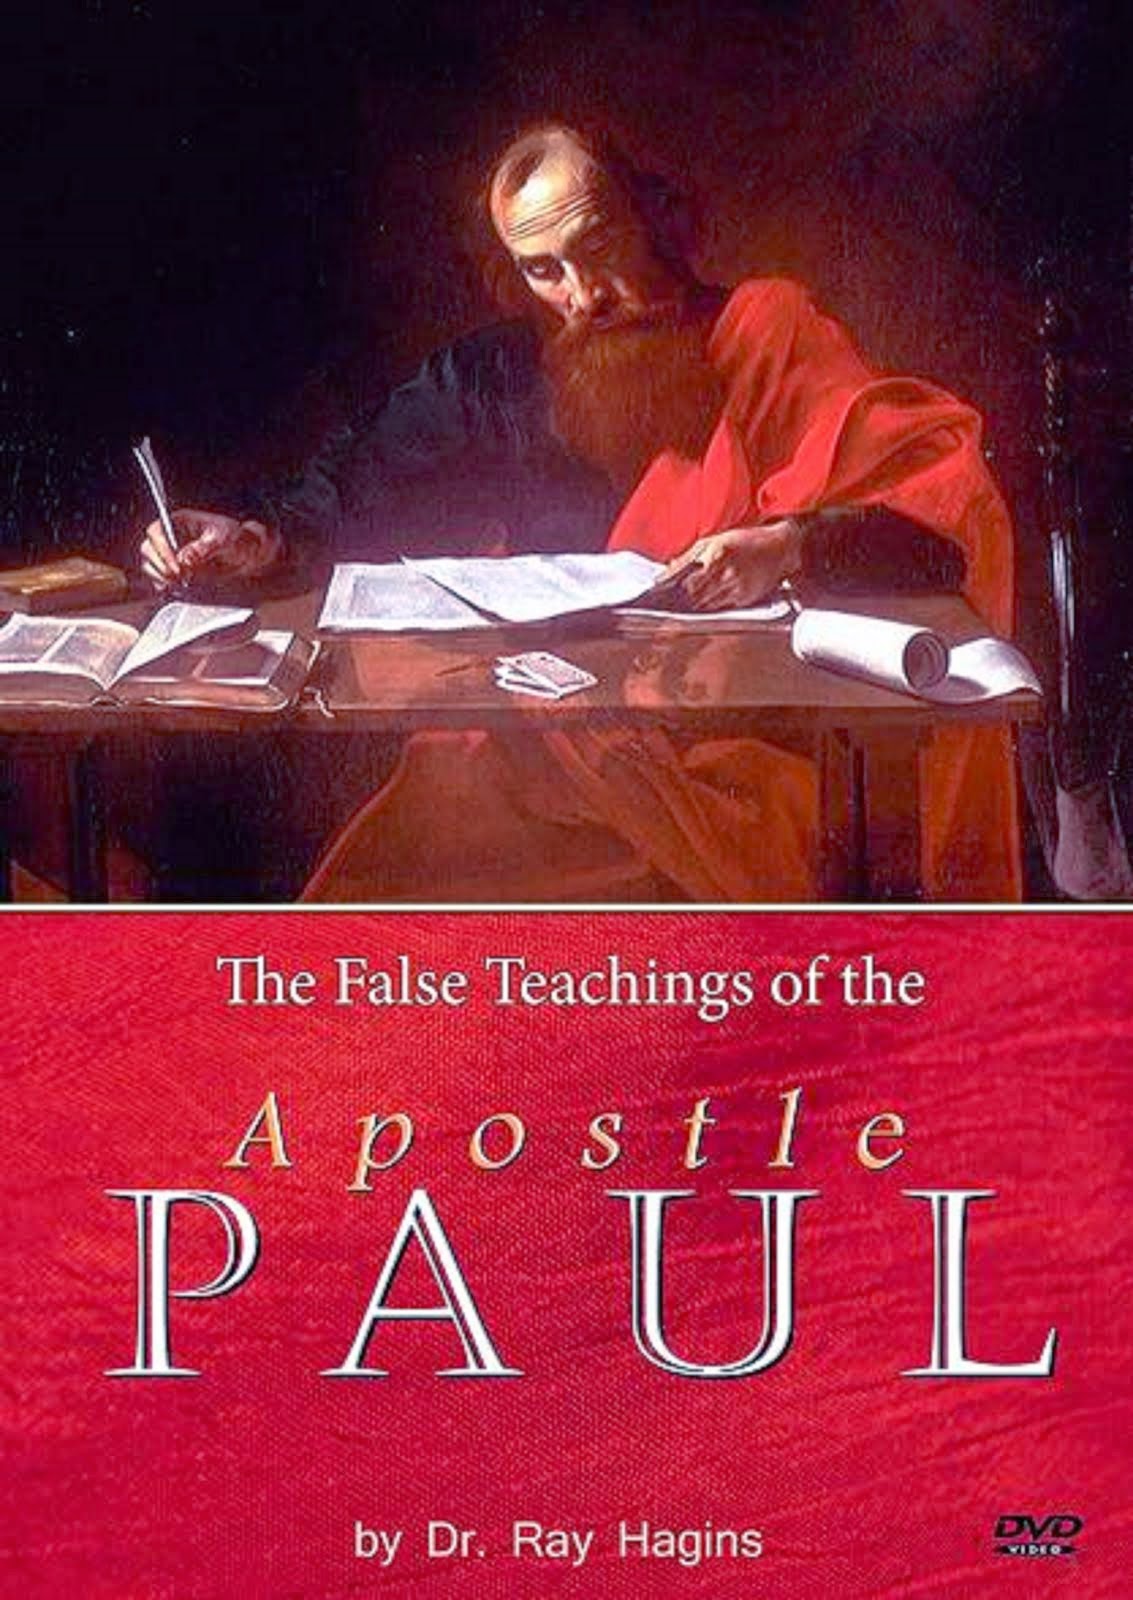 THE FALSE TEACHINGS OF THE APOSTLE PAUL